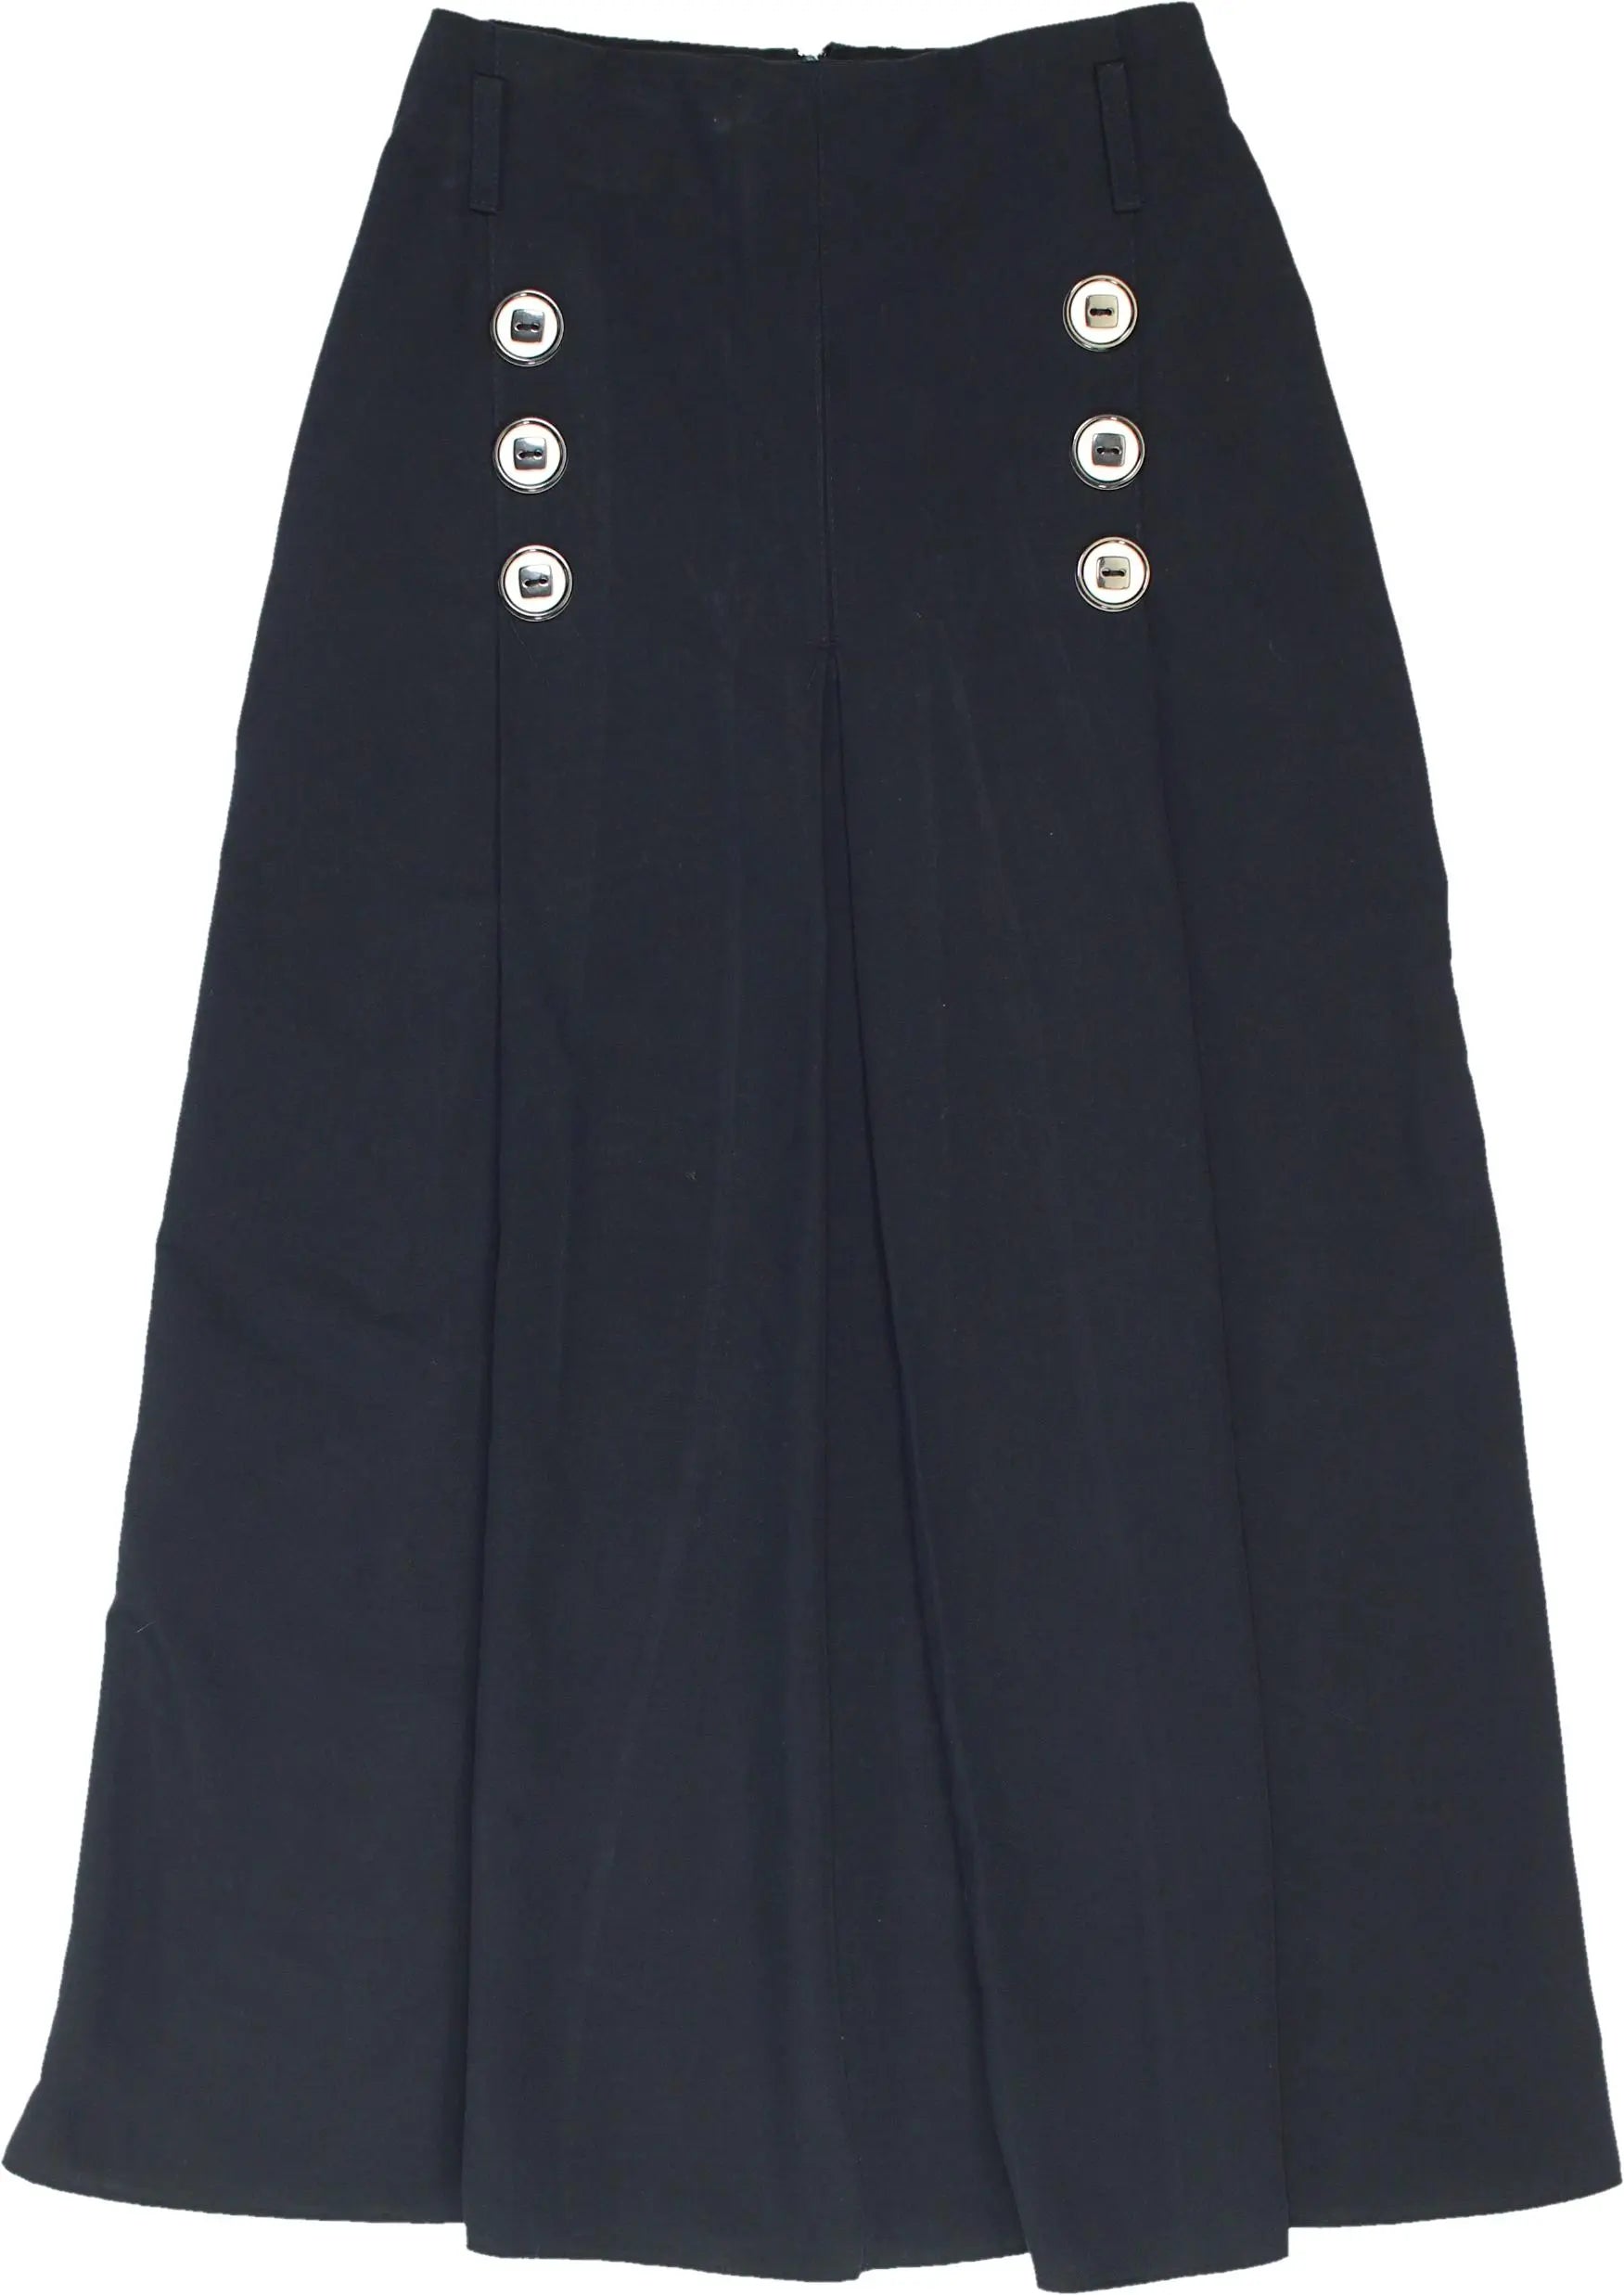 Handmade - Midi skirt- ThriftTale.com - Vintage and second handclothing